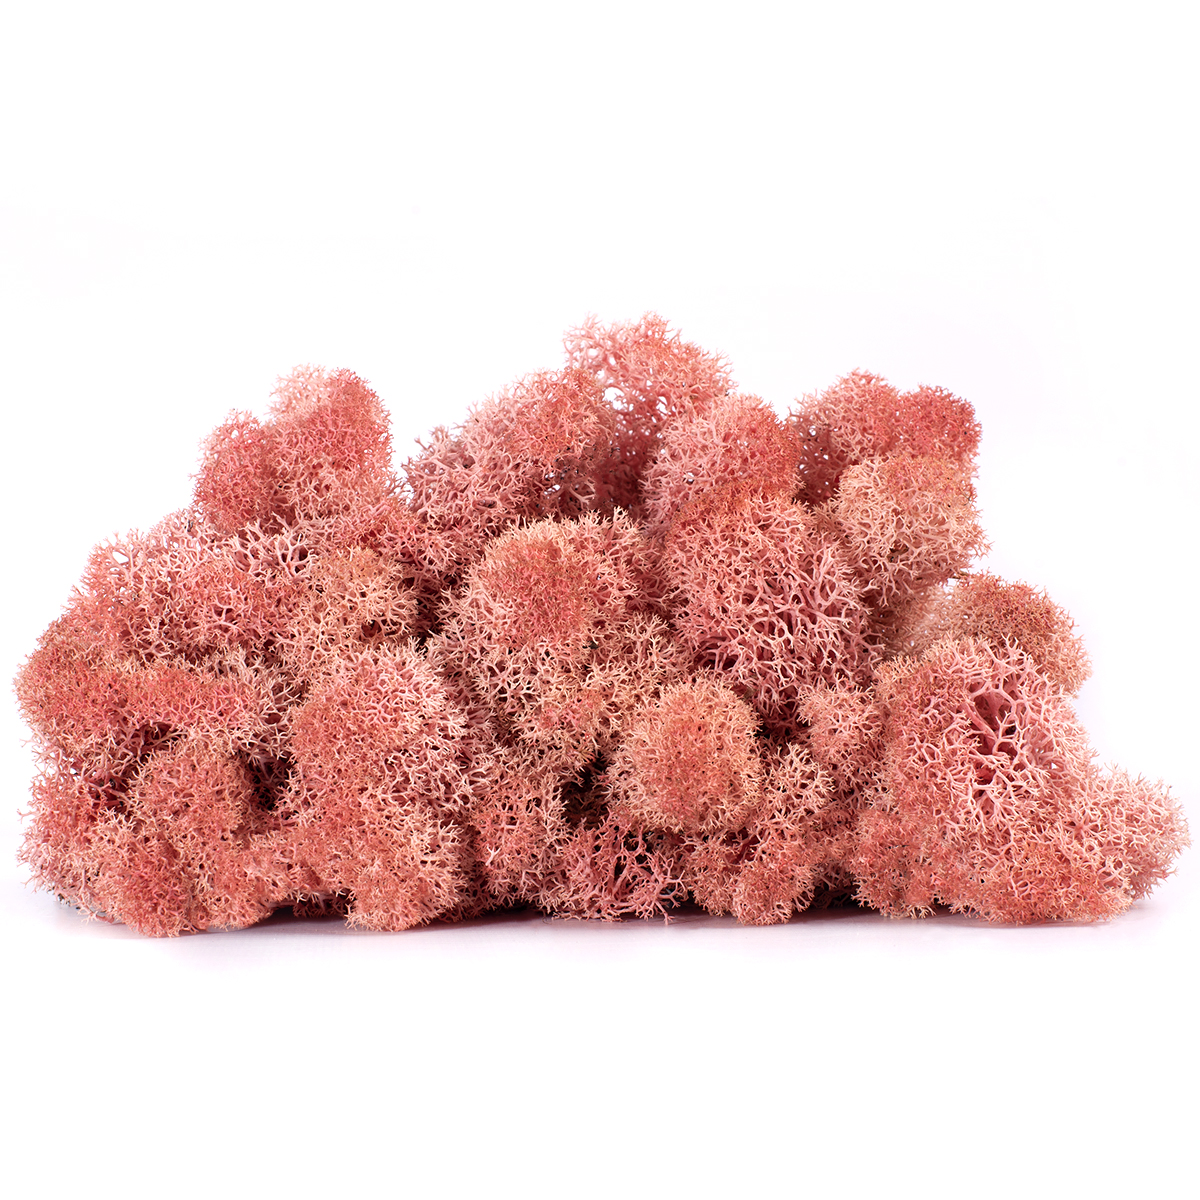 Lic/4062 lichen stabilisée rose box 4 kg